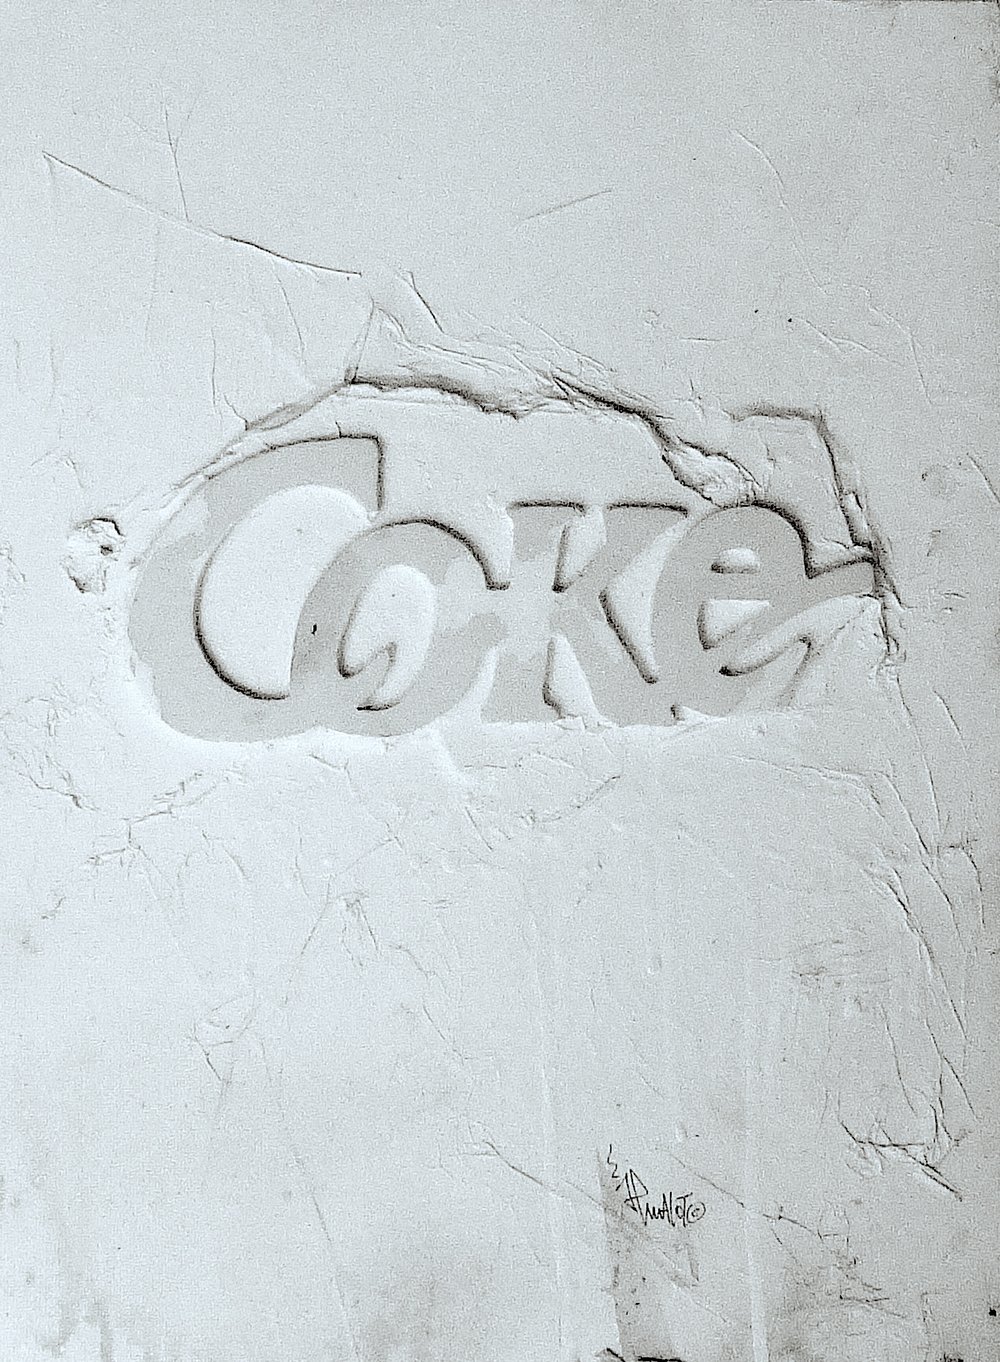 JP Malot. 'Coke' Brut. 2021. 40x30. Signed + COA. Frame included.